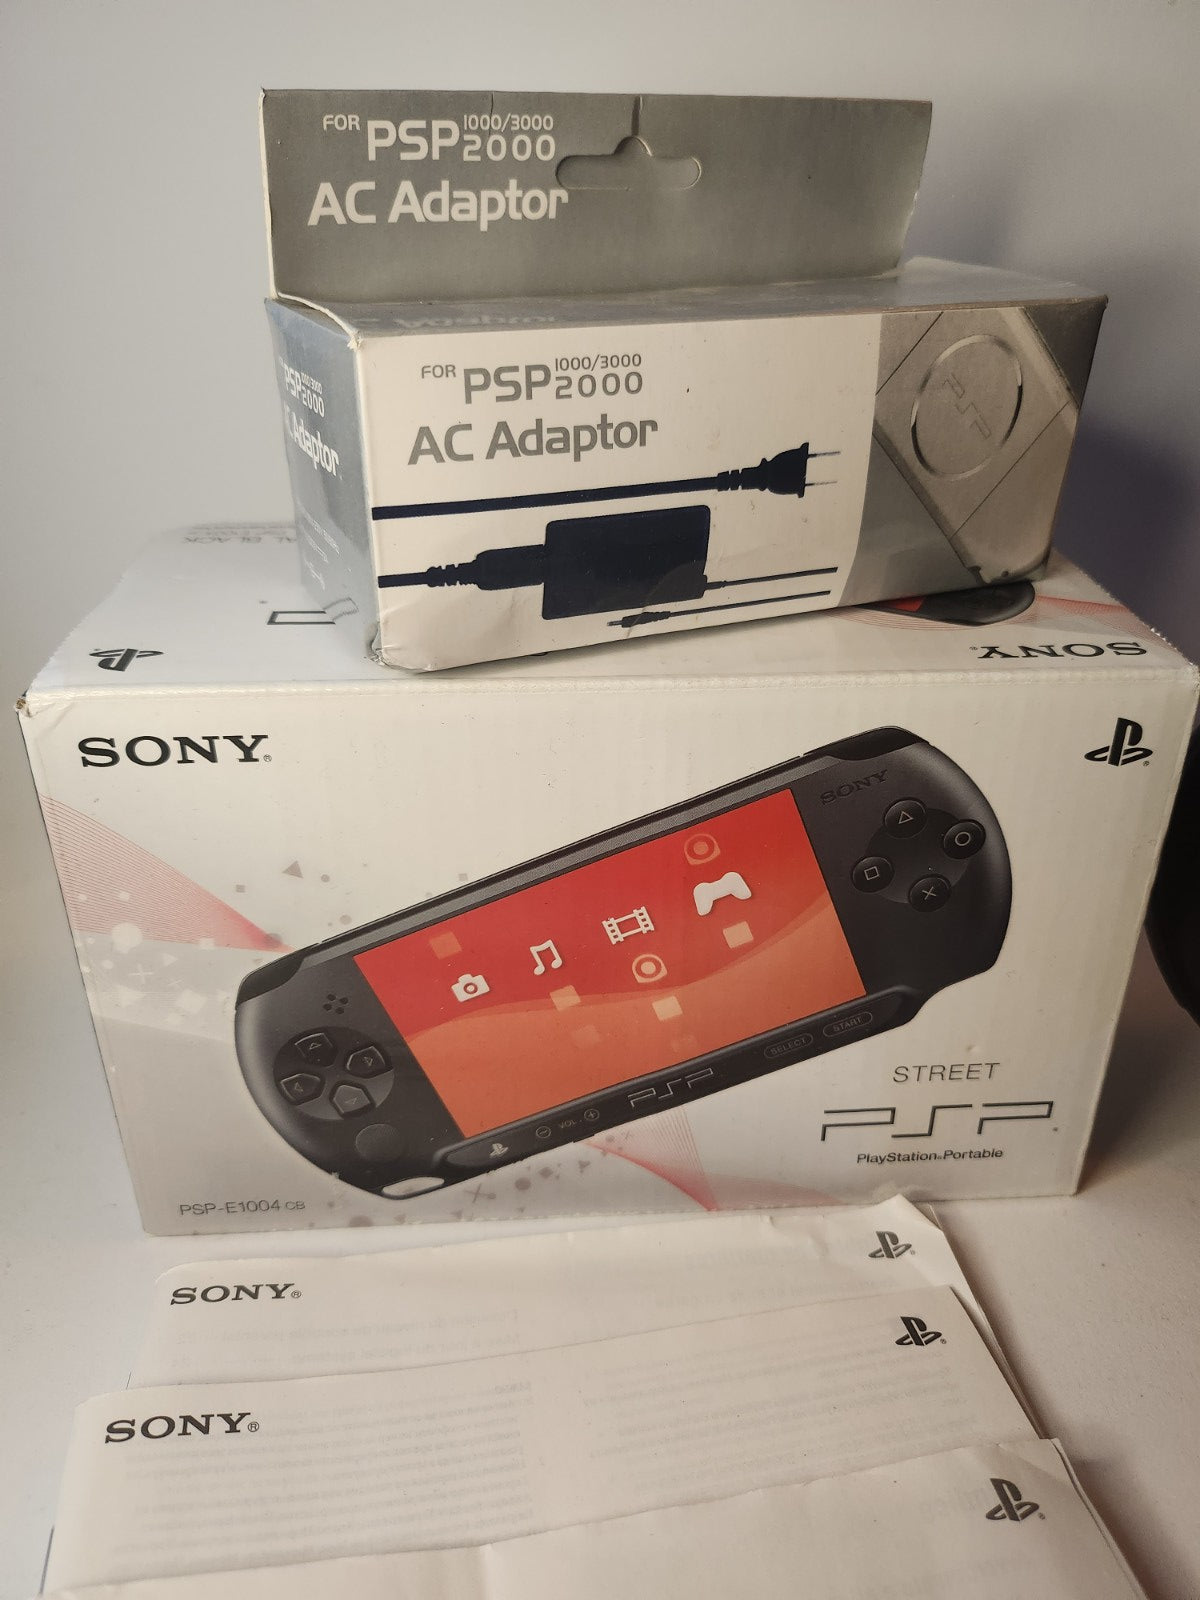 Sony Playstation Portable (PSP) Street Black E1004cb im Karton